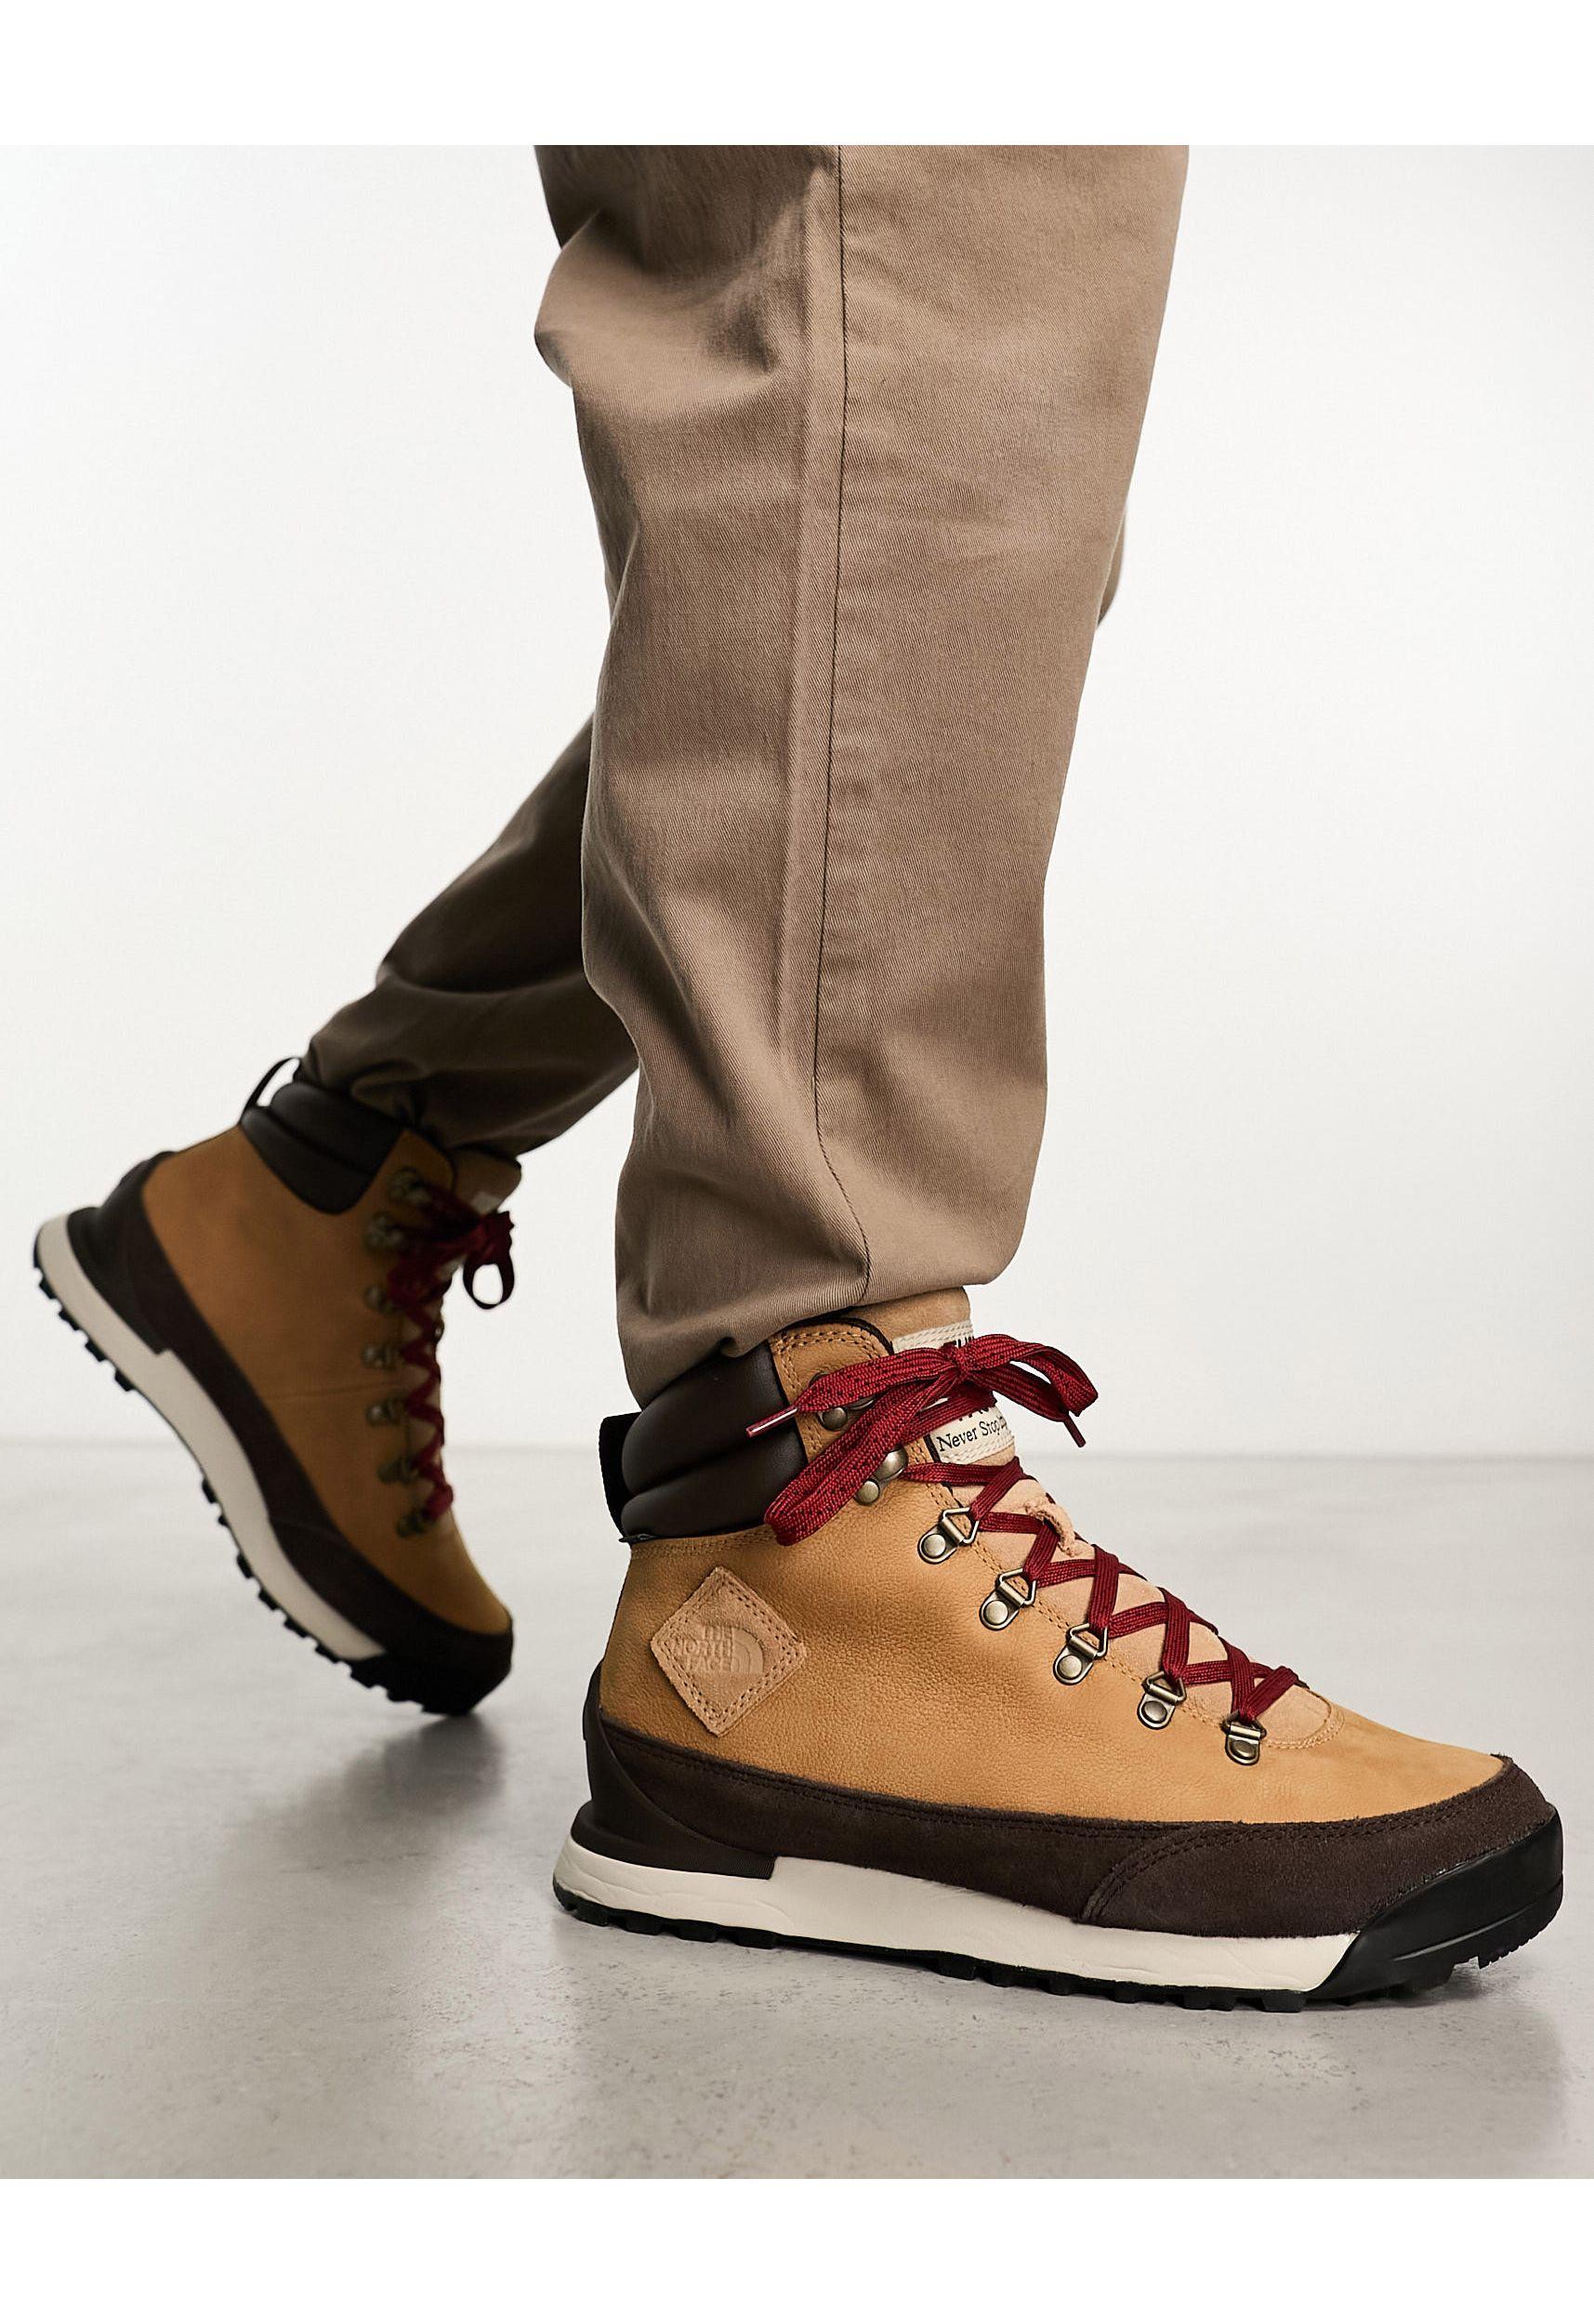 North Face Back To Berkeley Men's Boots Best Sale | bellvalefarms.com